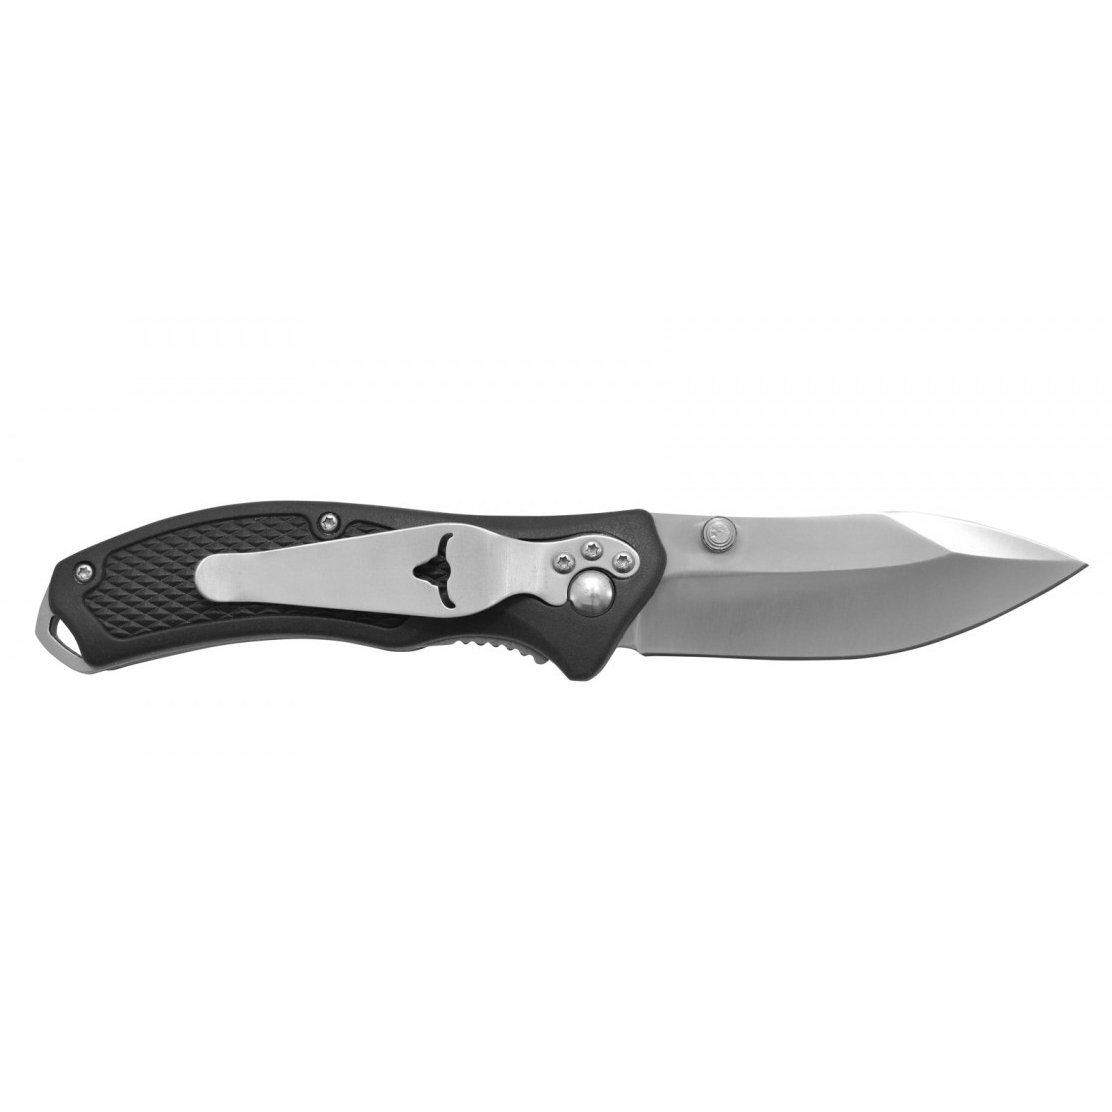 Складной нож Camillus Western Blactrax, сталь 420 Stainless Steel, рукоять термопластик FRN, чёрный от Ножиков